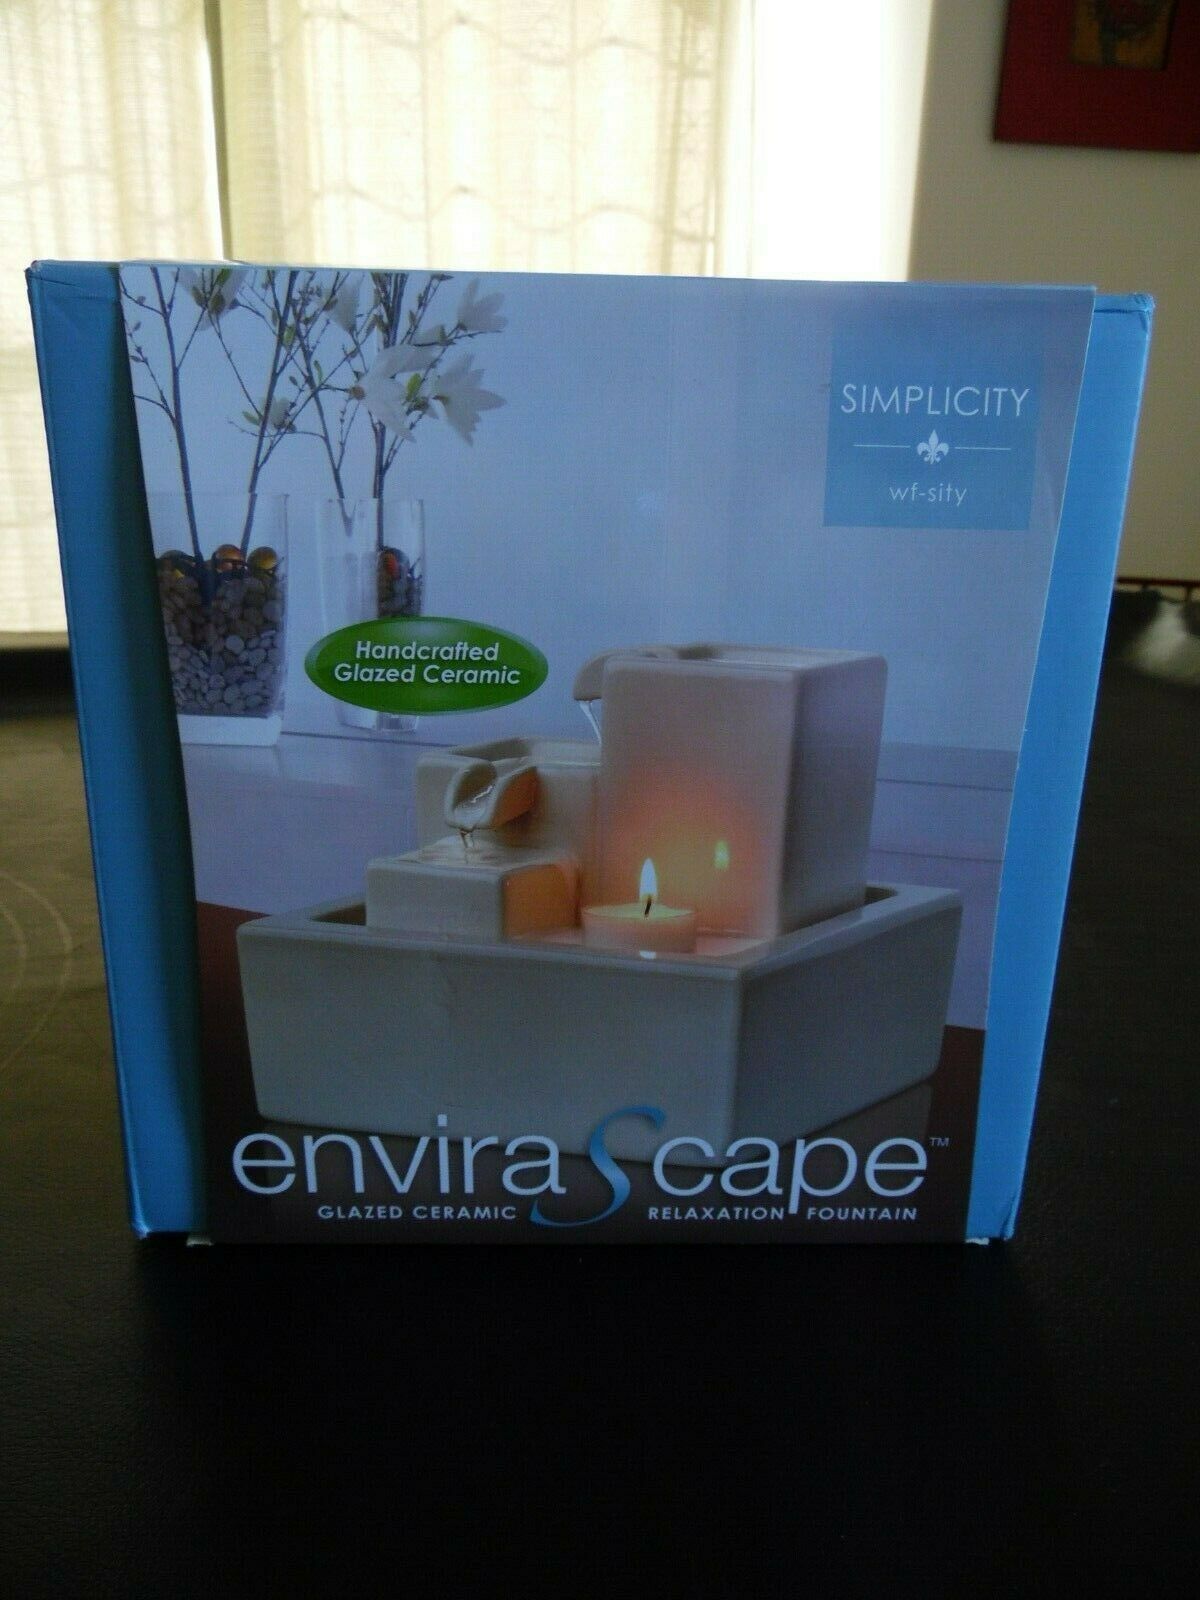 Homedics 2012 Envirascape Glazed Ceramic Relaxation Fountain Model #wfl-sity New